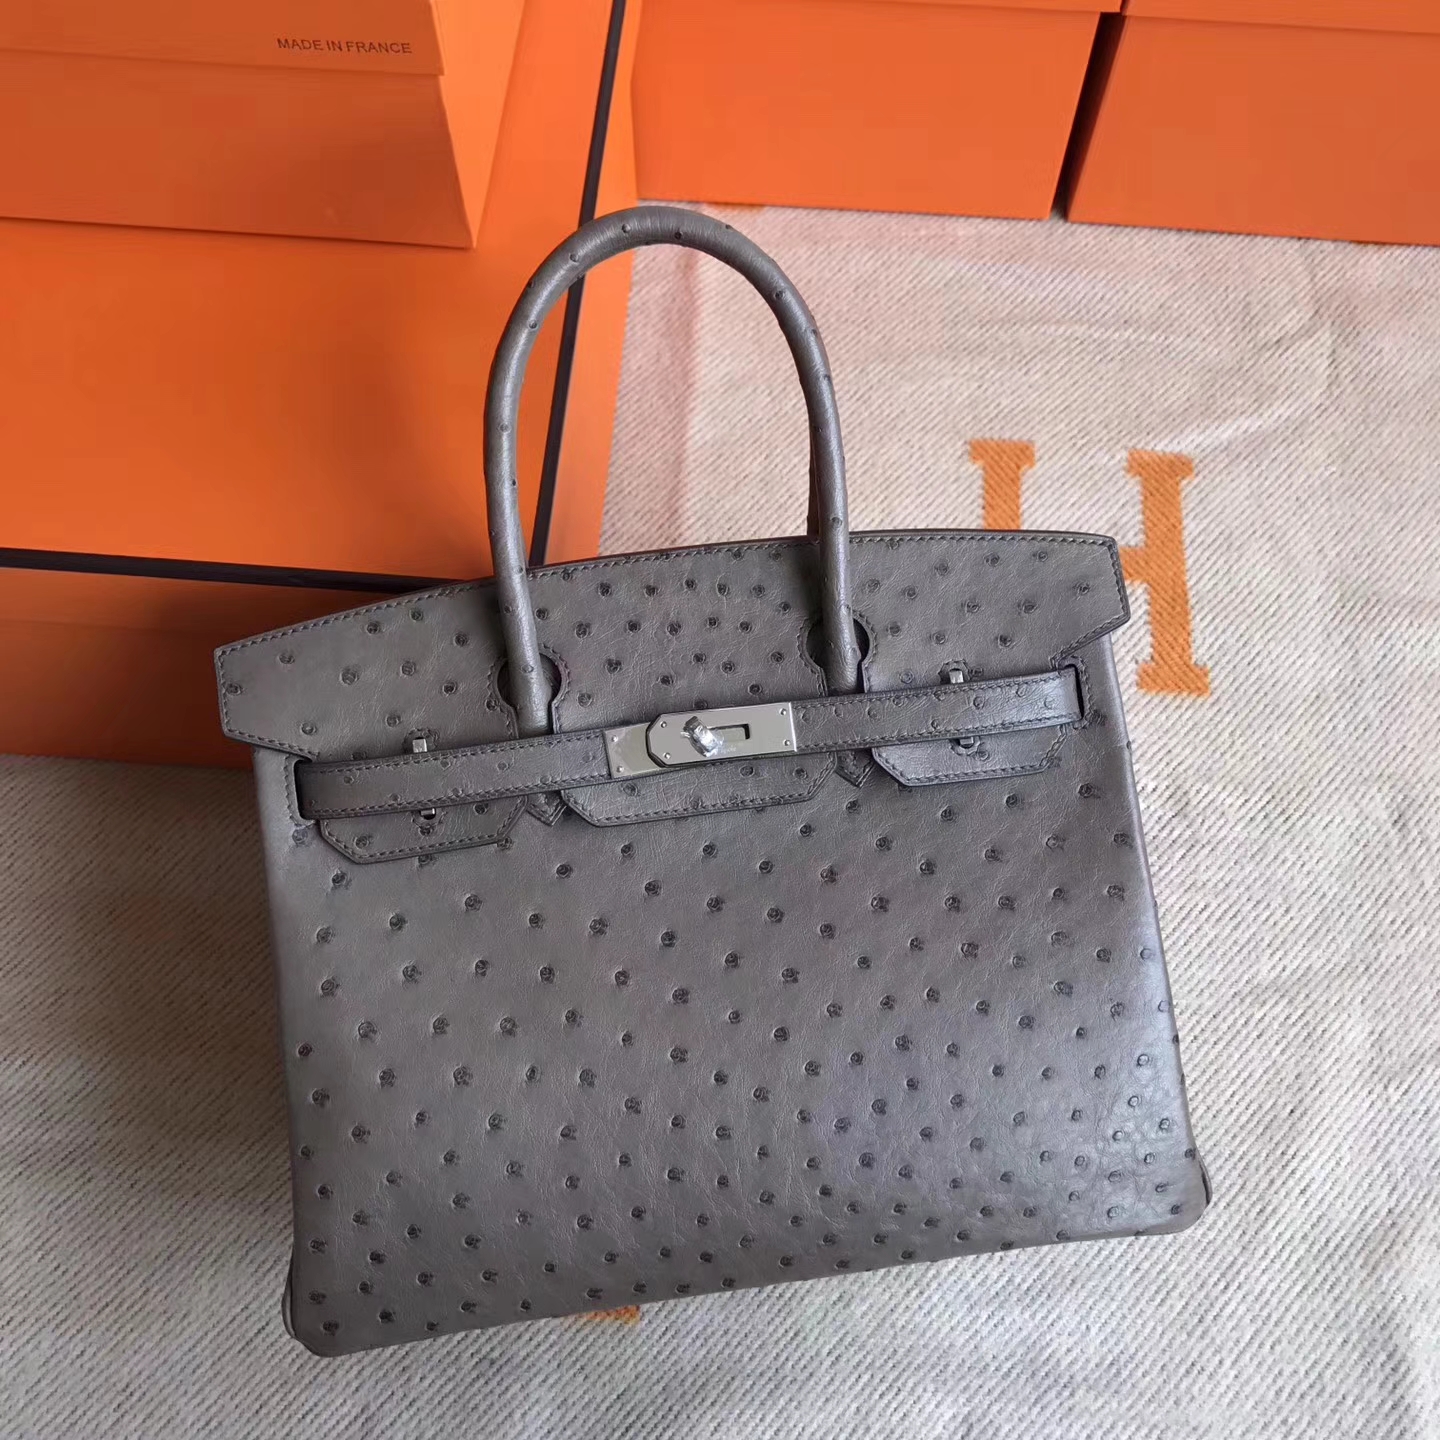 Fashion Hermes Ostrich Leather Birkin30cm Handbag in Mousse Grey Silver ...